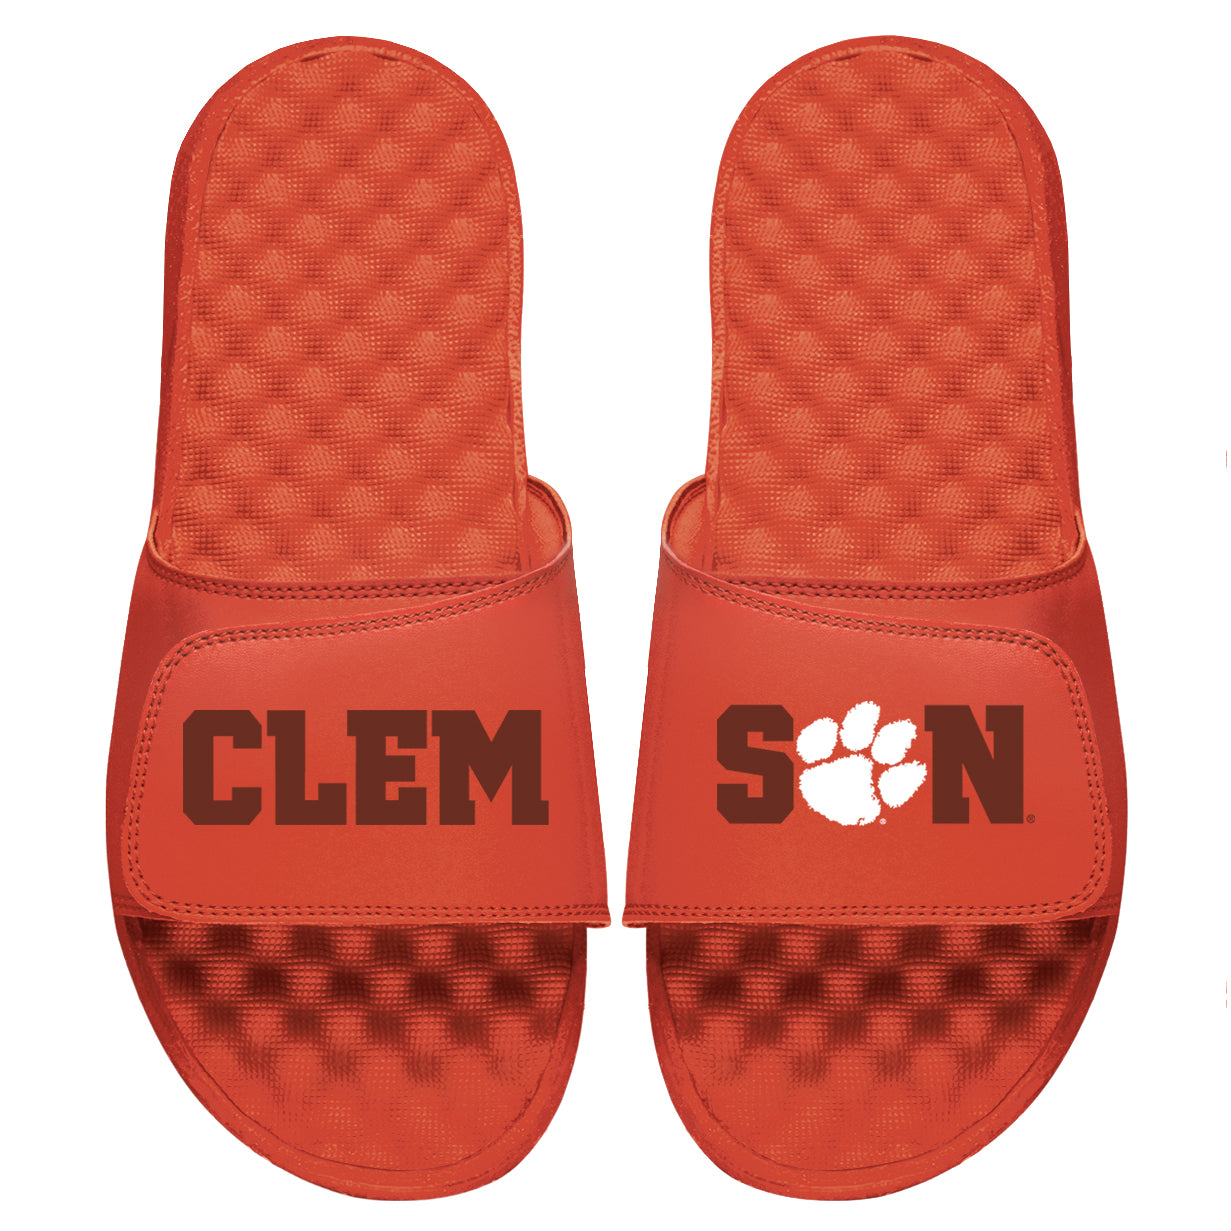 Clemson Tonal Pop Orange Slides